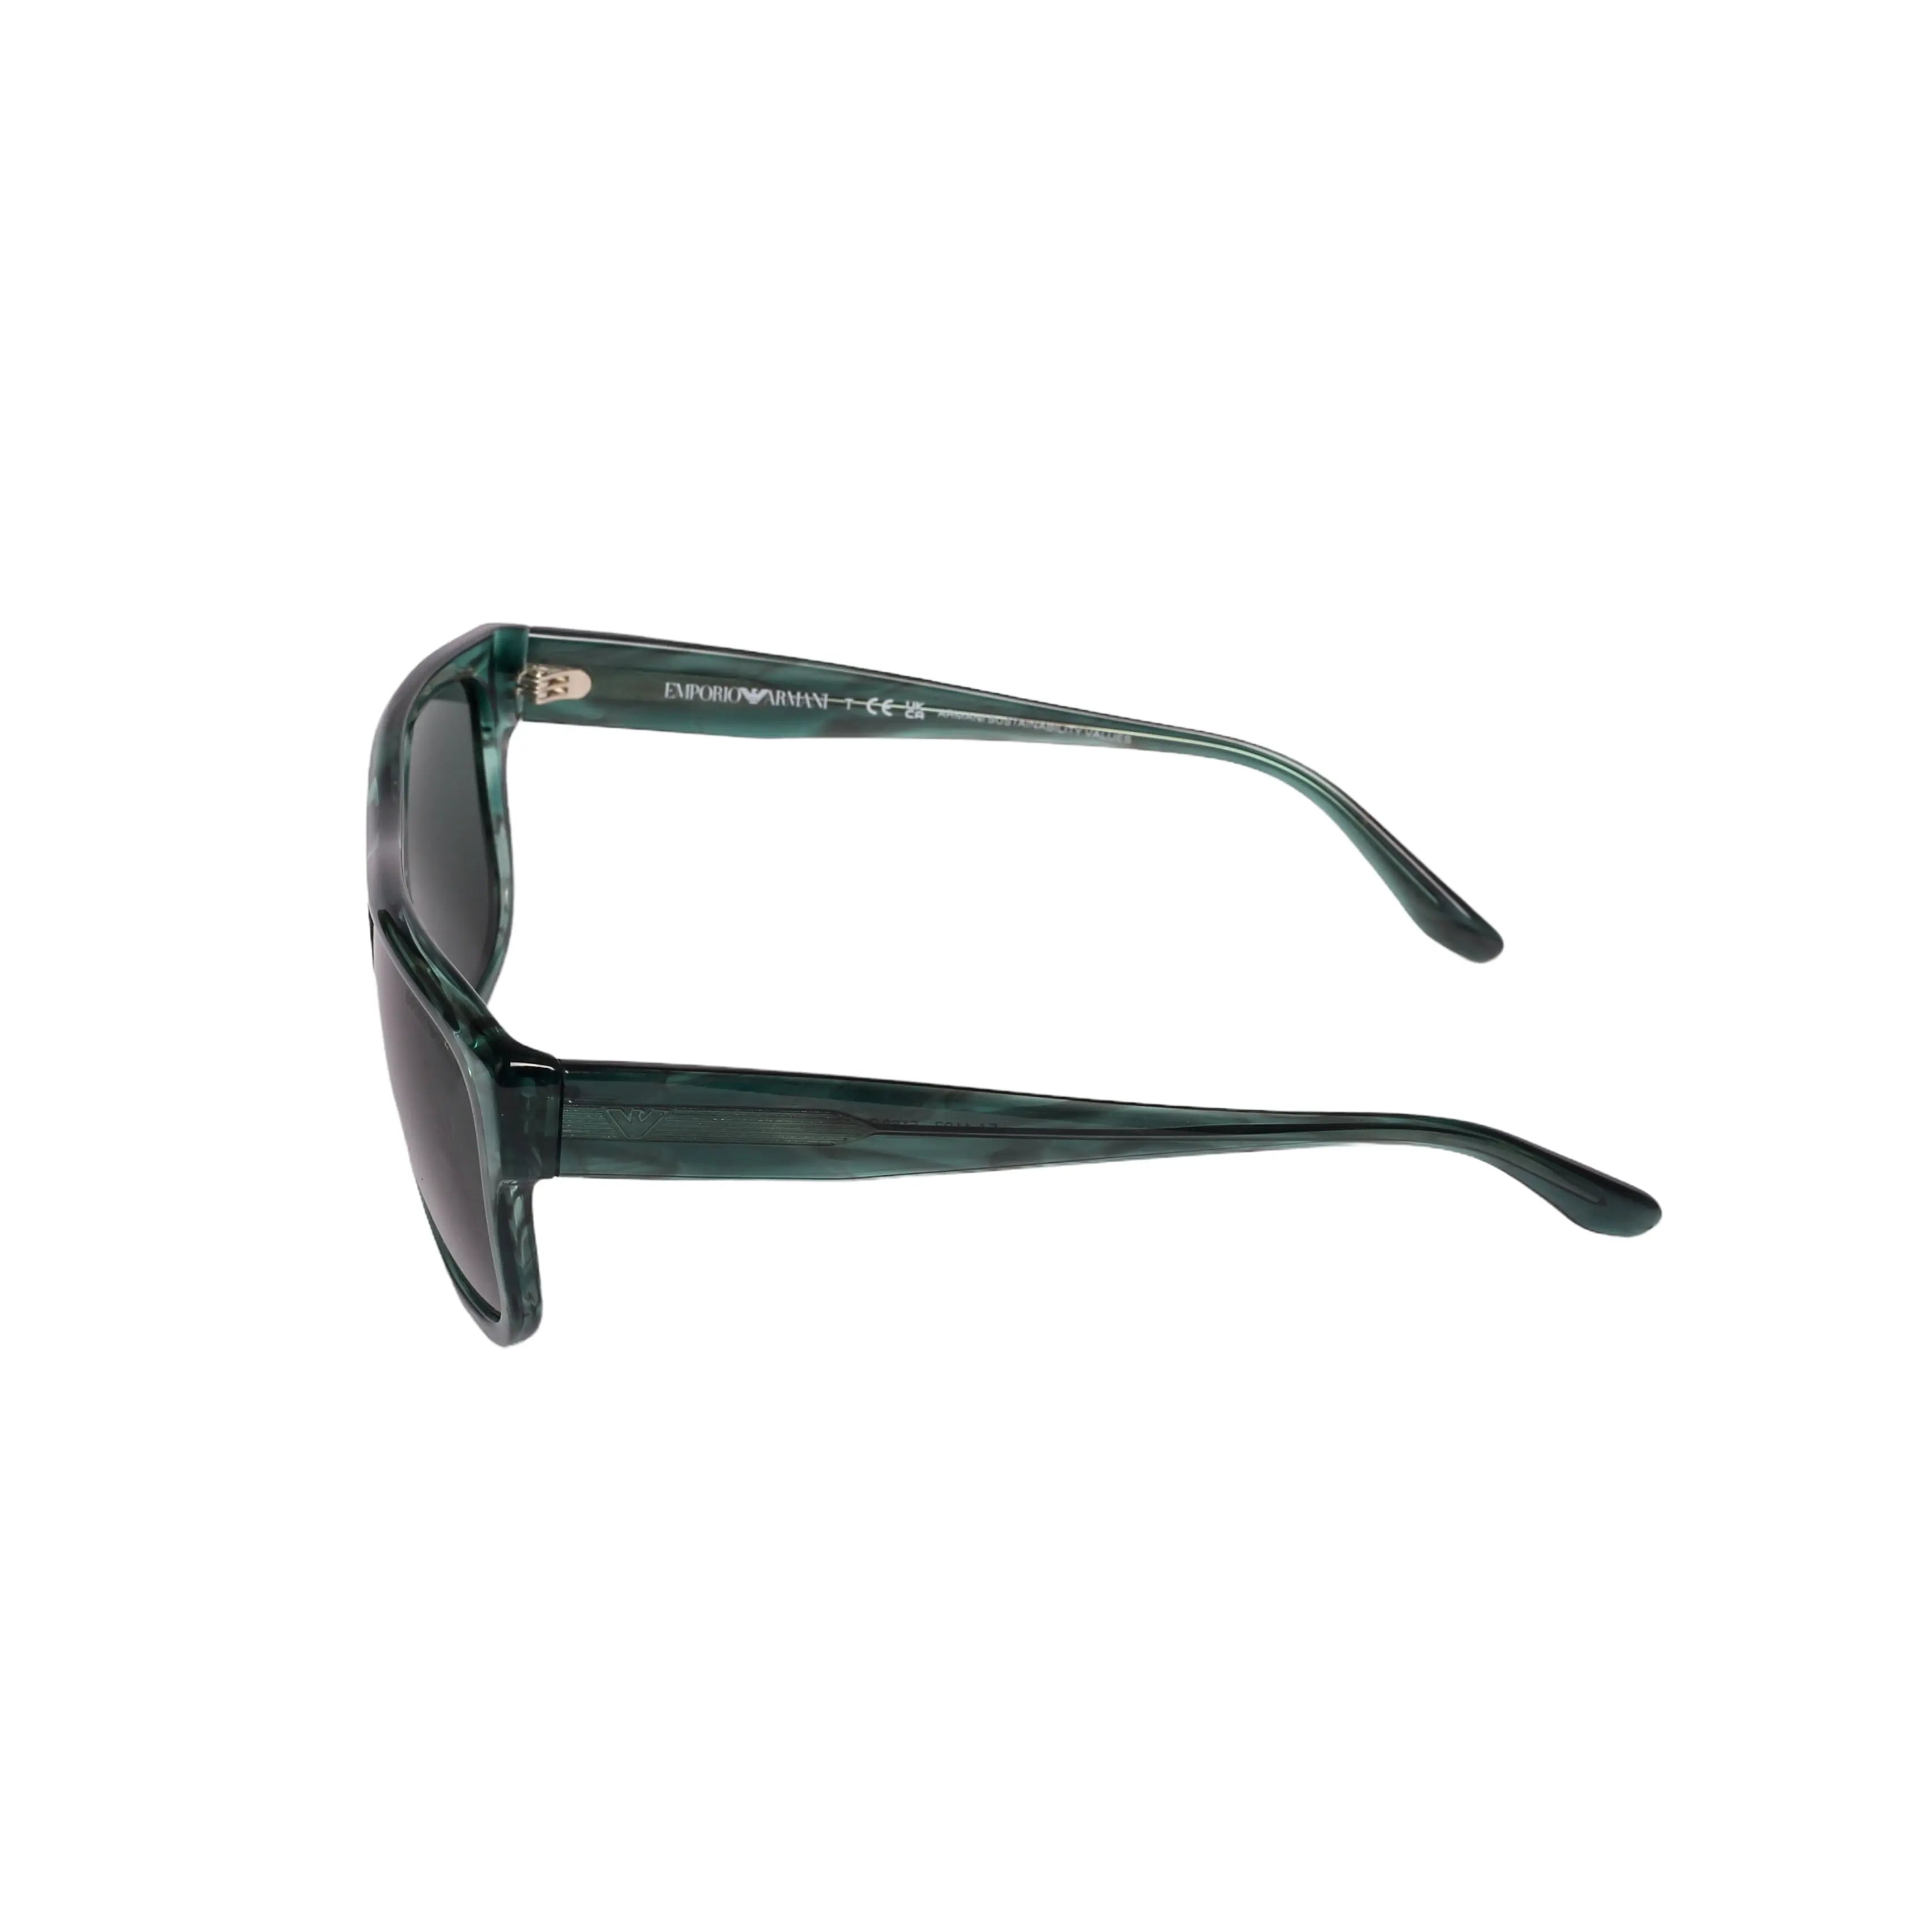 Emporio Armani-EA 4197-57-5168 Sunglasses - Premium Sunglasses from Emporio Armani - Just Rs. 11890! Shop now at Laxmi Opticians